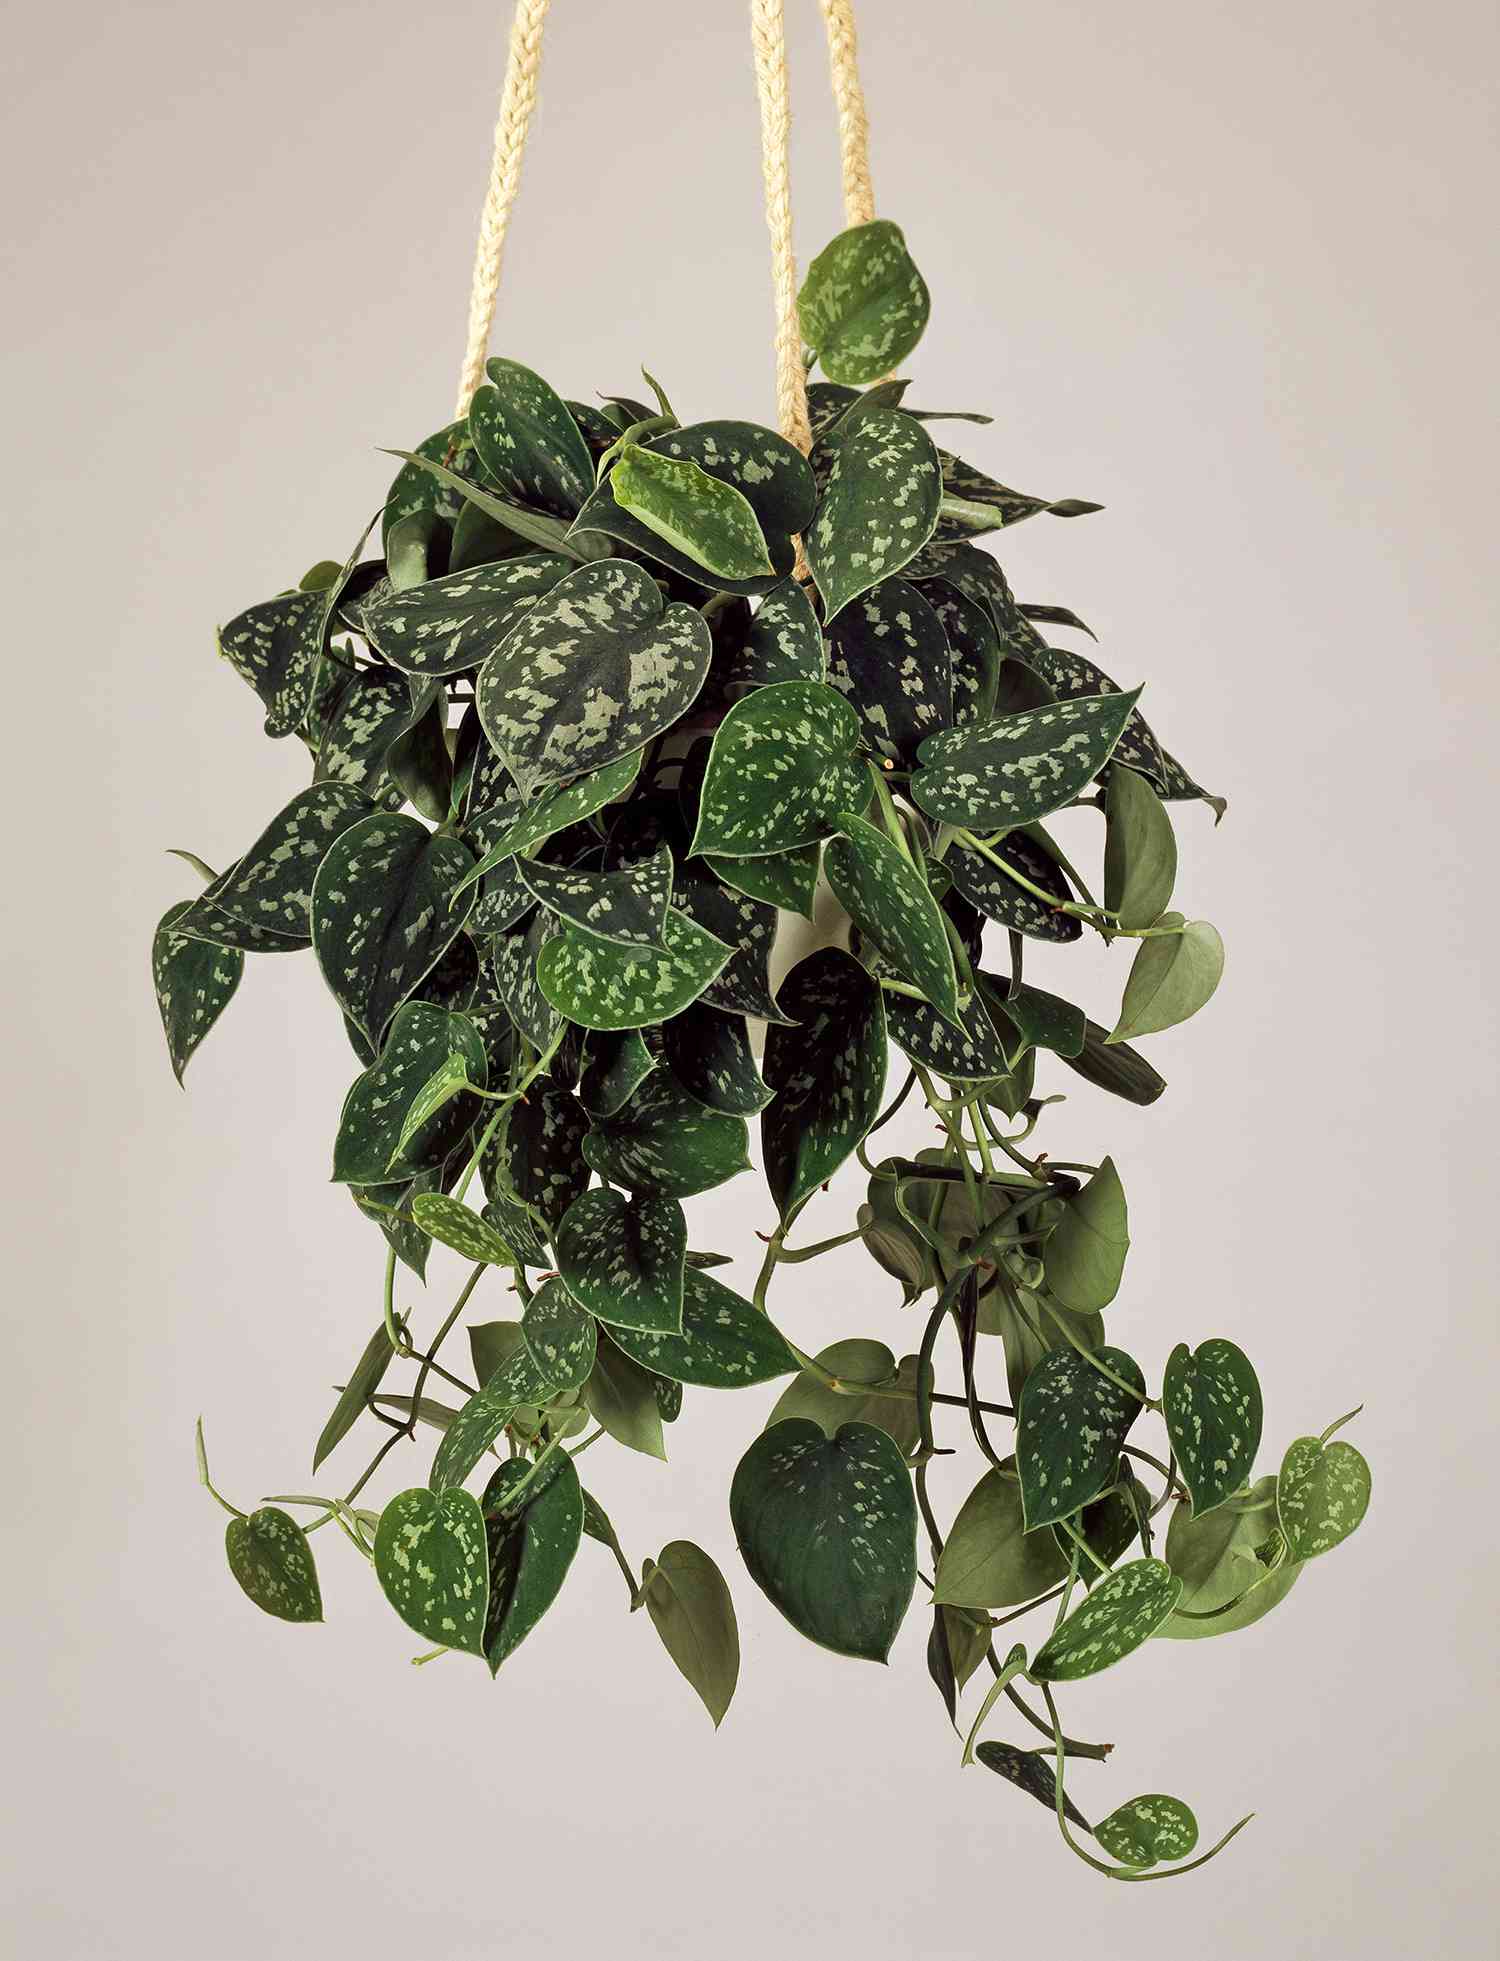 satin pothos hanging plant